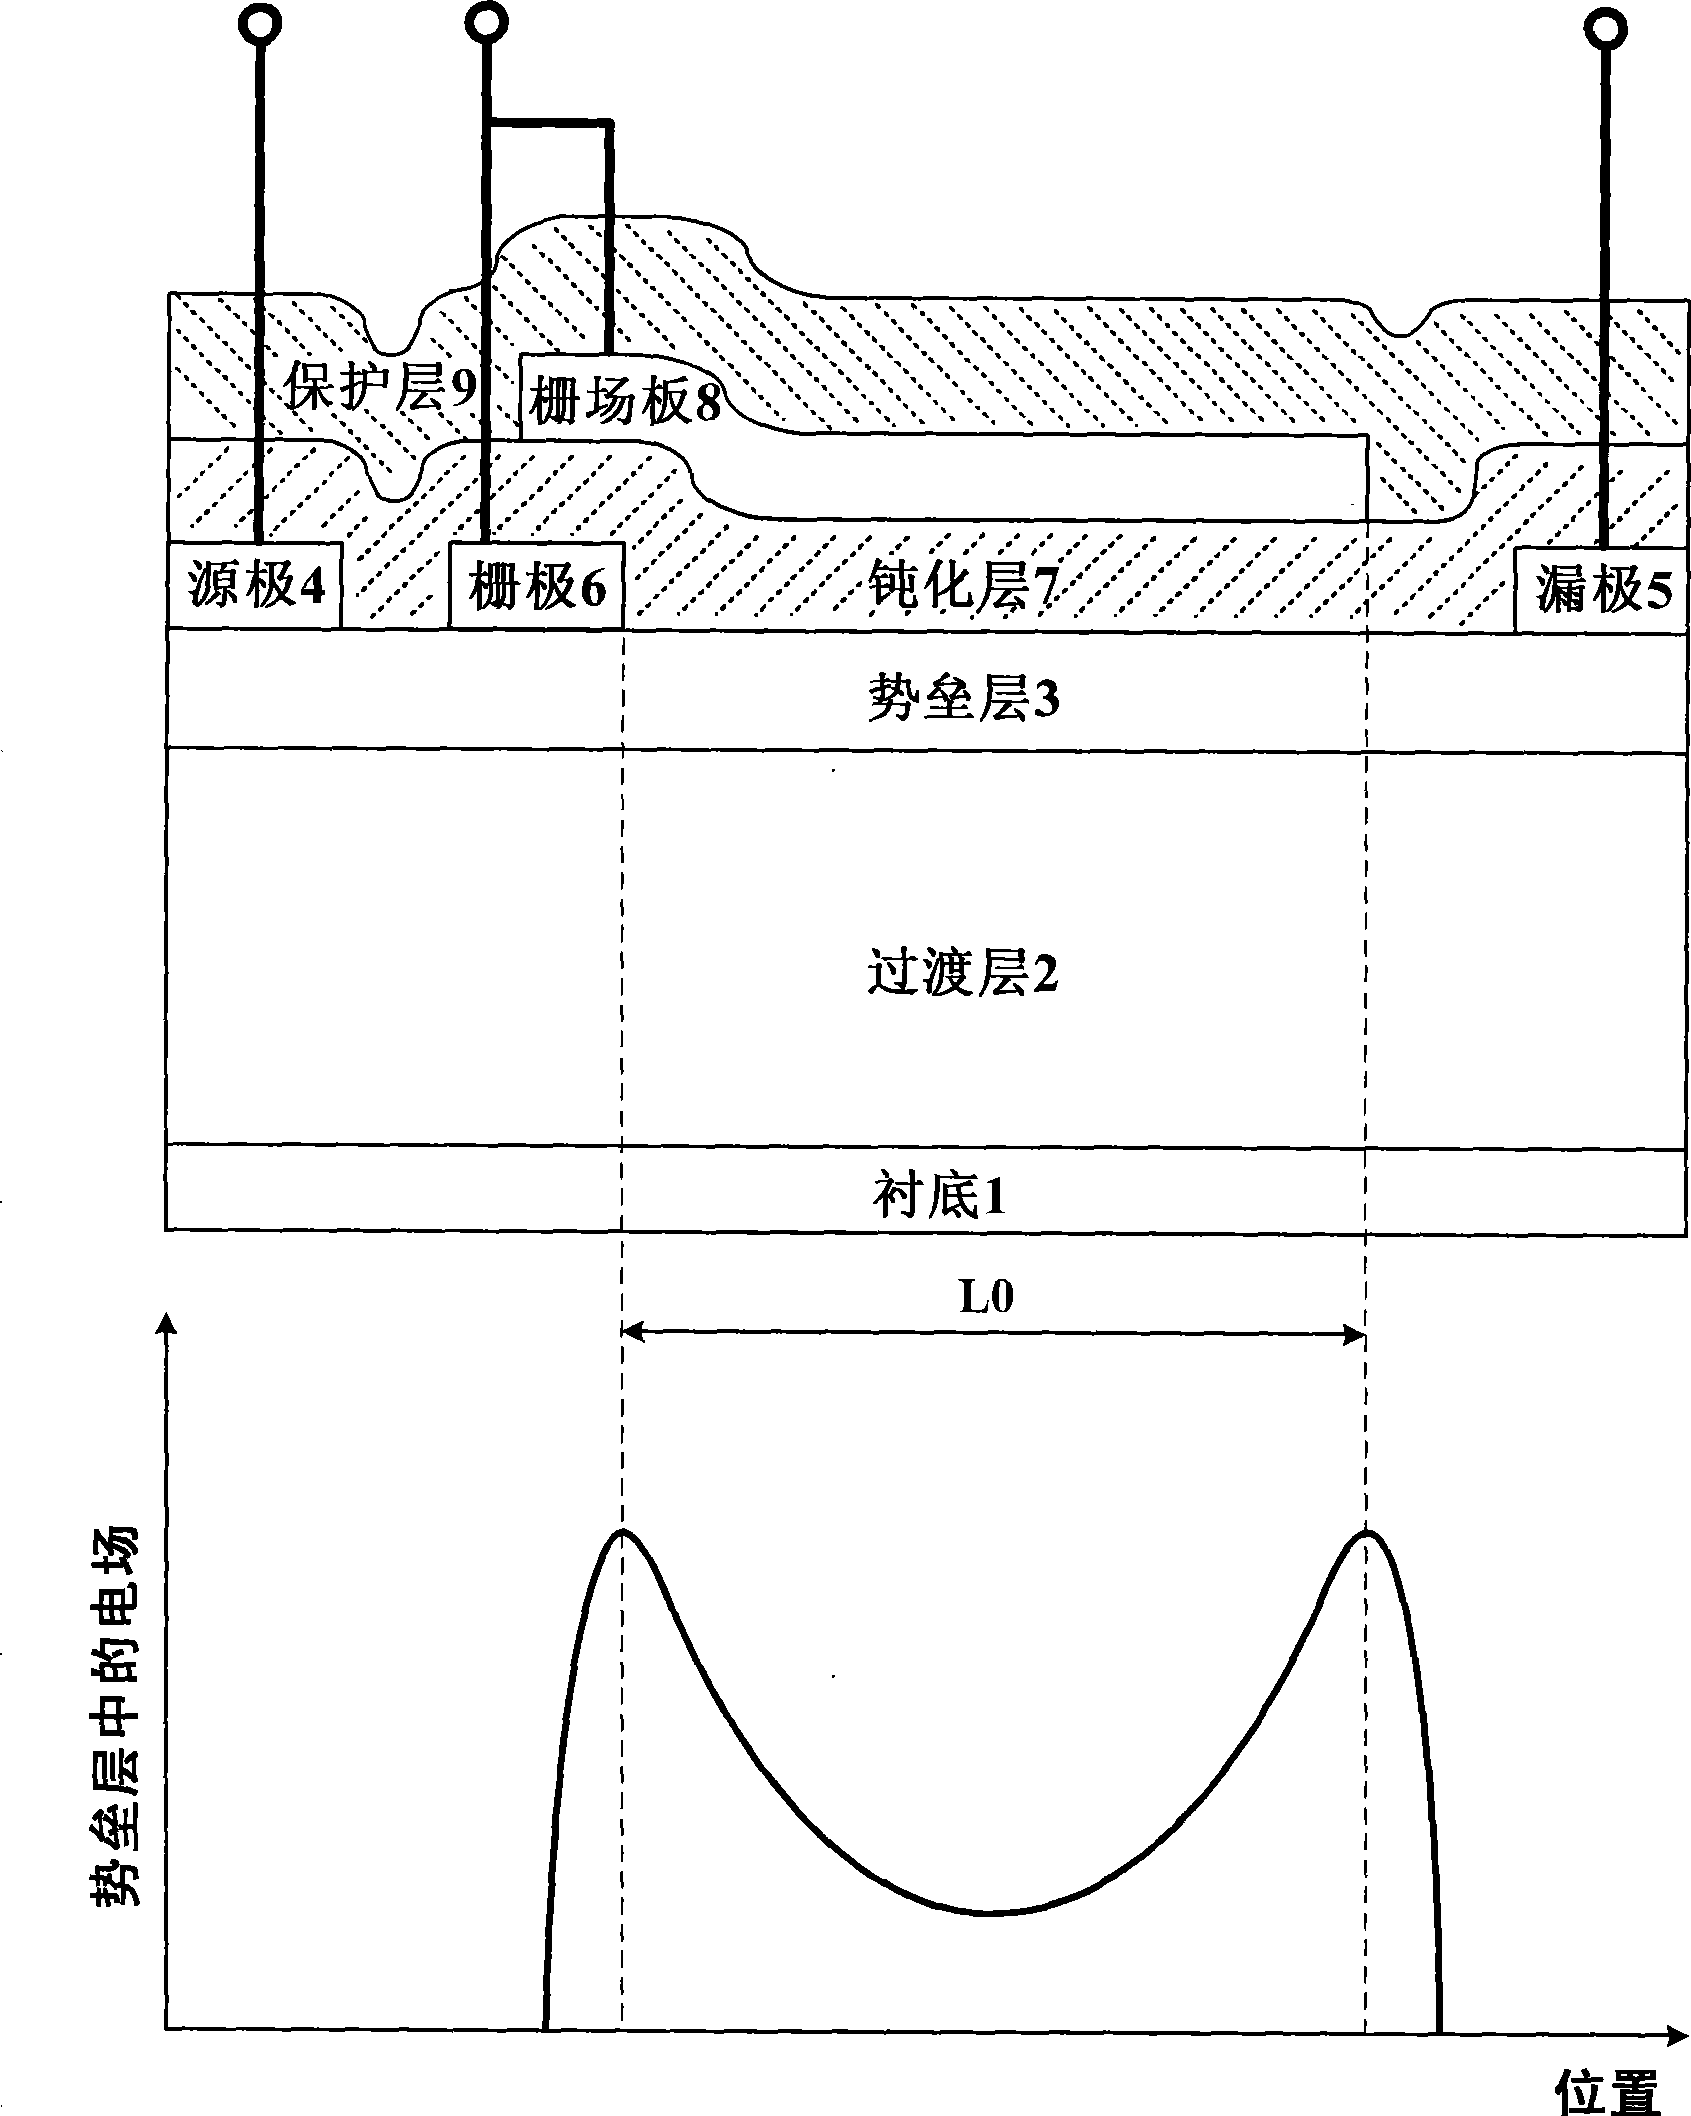 Hetero junction field effect transistor for insulated gate type source field board